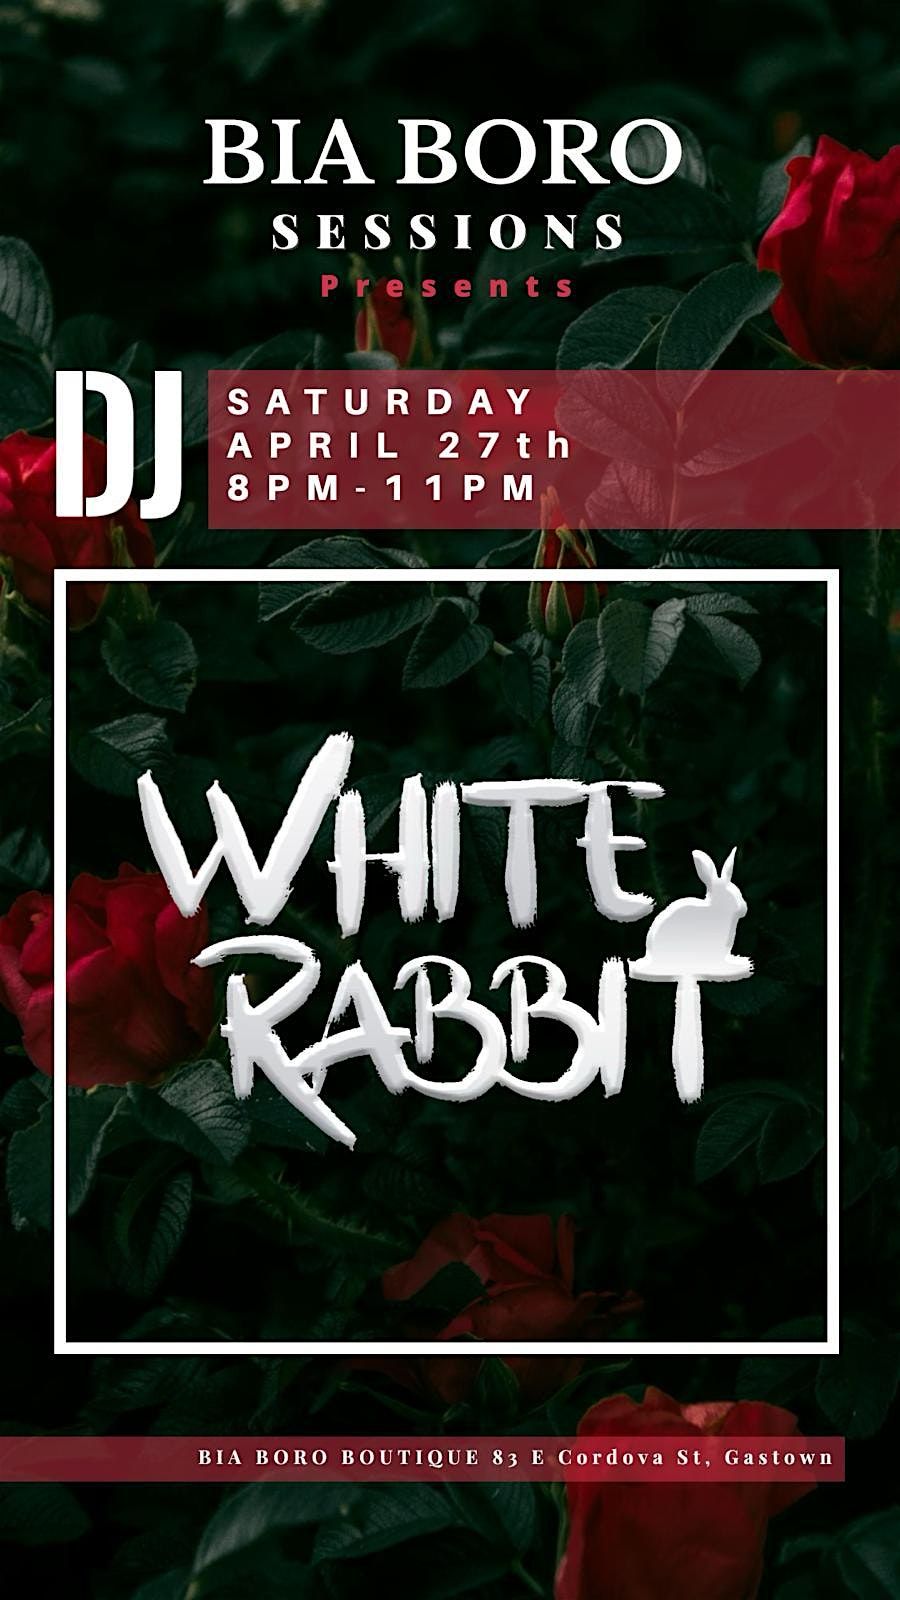 DJ White Rabbit